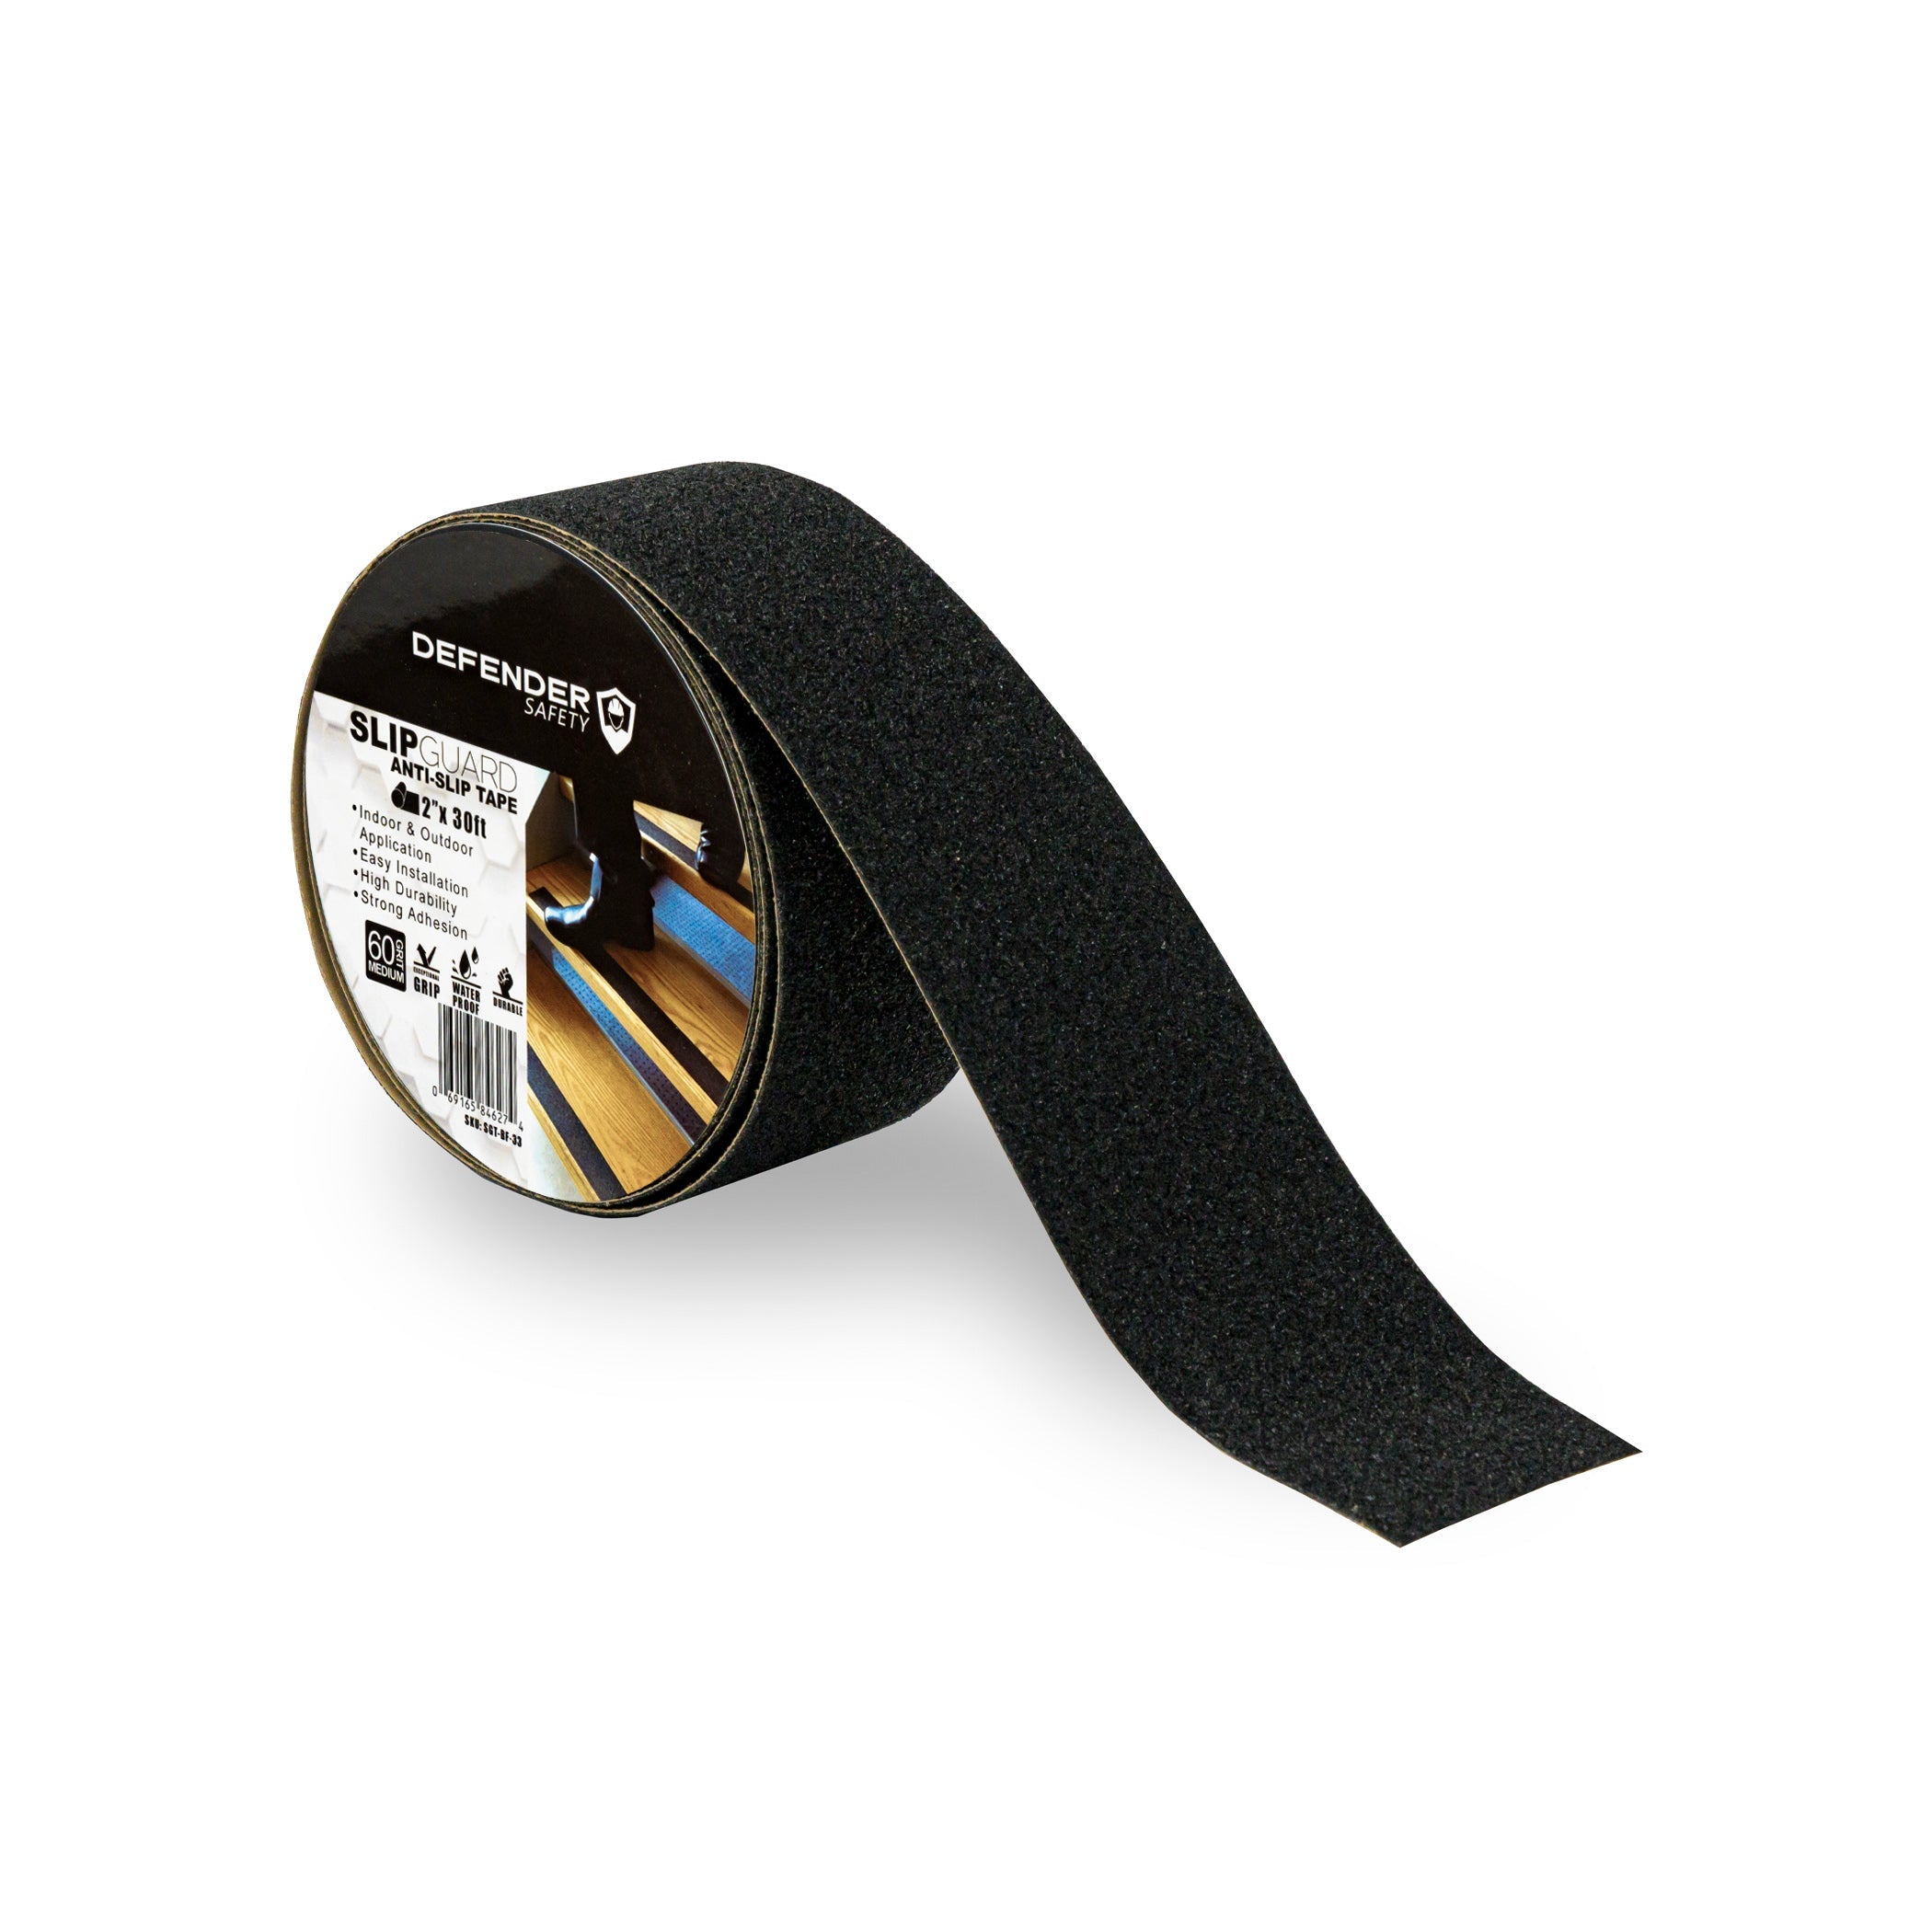 SLIPGUARD™ Anti-Slip Floor Tape. 60 Grit. Black. - Defender Safety